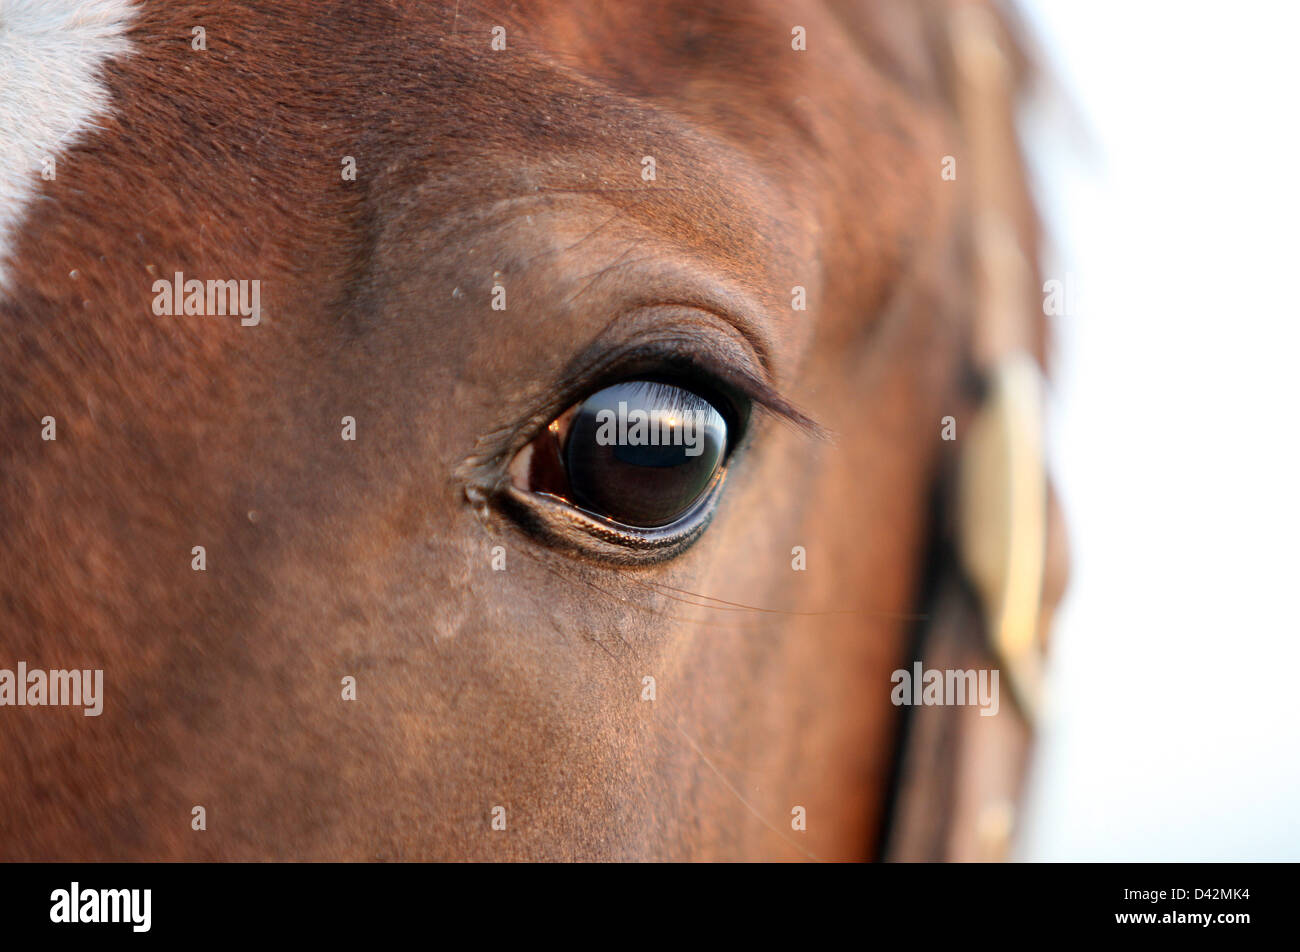 Görlsdorf, Germany, around the eyes of a horse Stock Photo